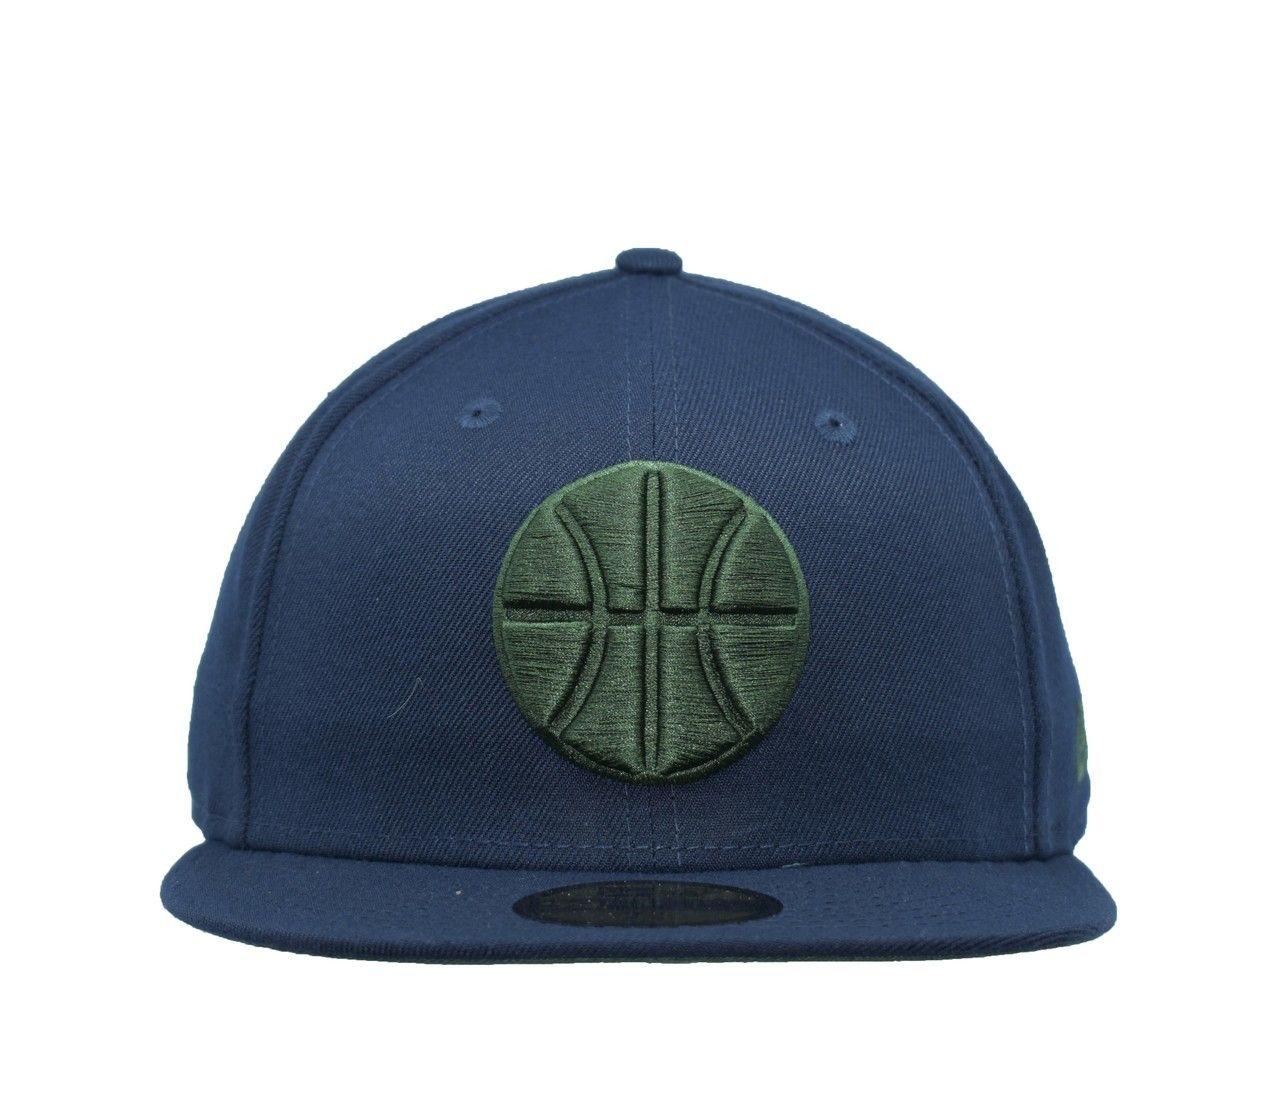 Grey and Green Circle Logo - Utah Jazz Hats for Men: Navy New Era Hat